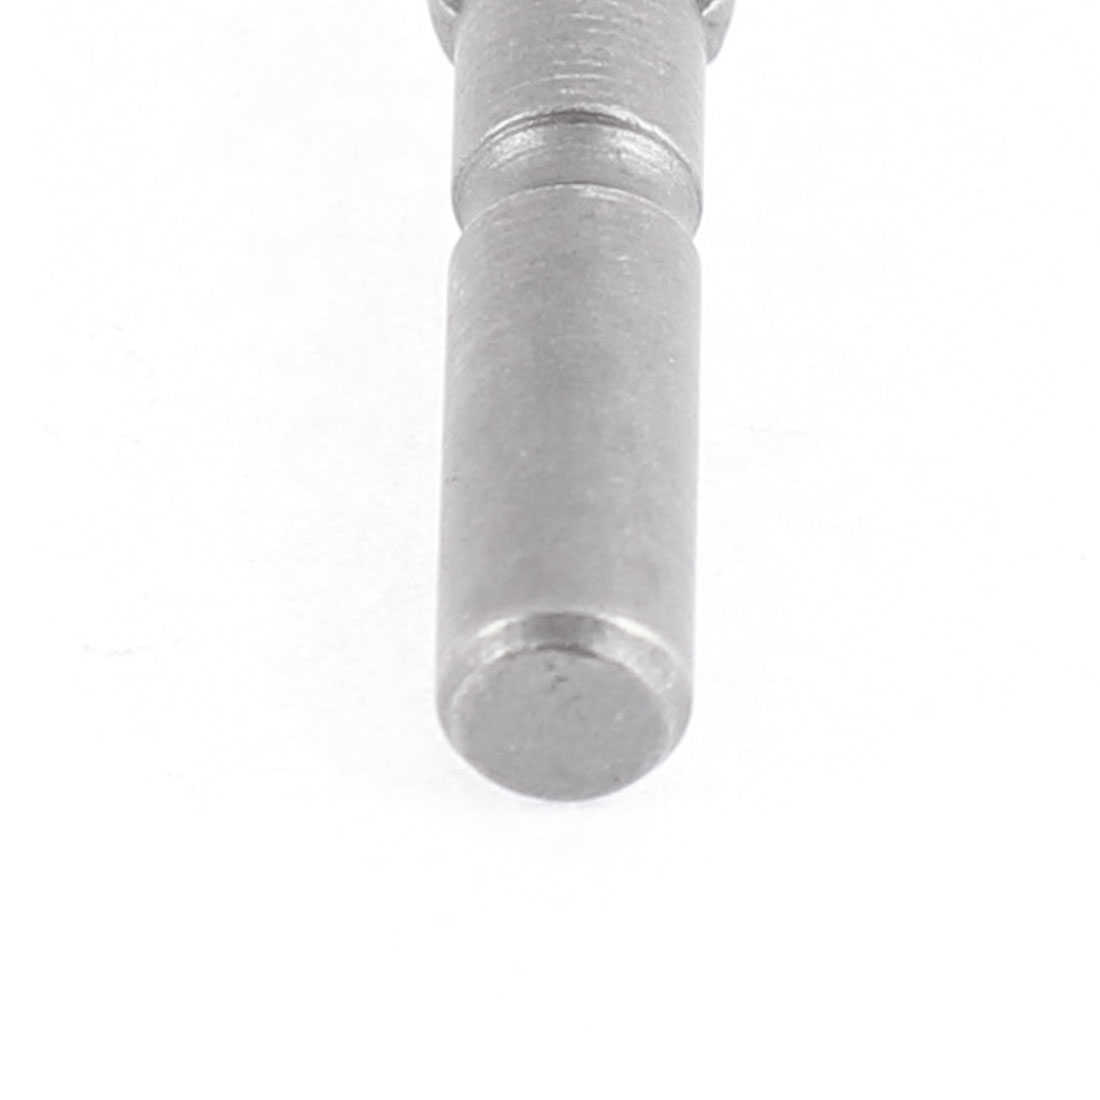 65mm Length 14mm Hex Socket Nut Driver Spanner Setter Bit Tool